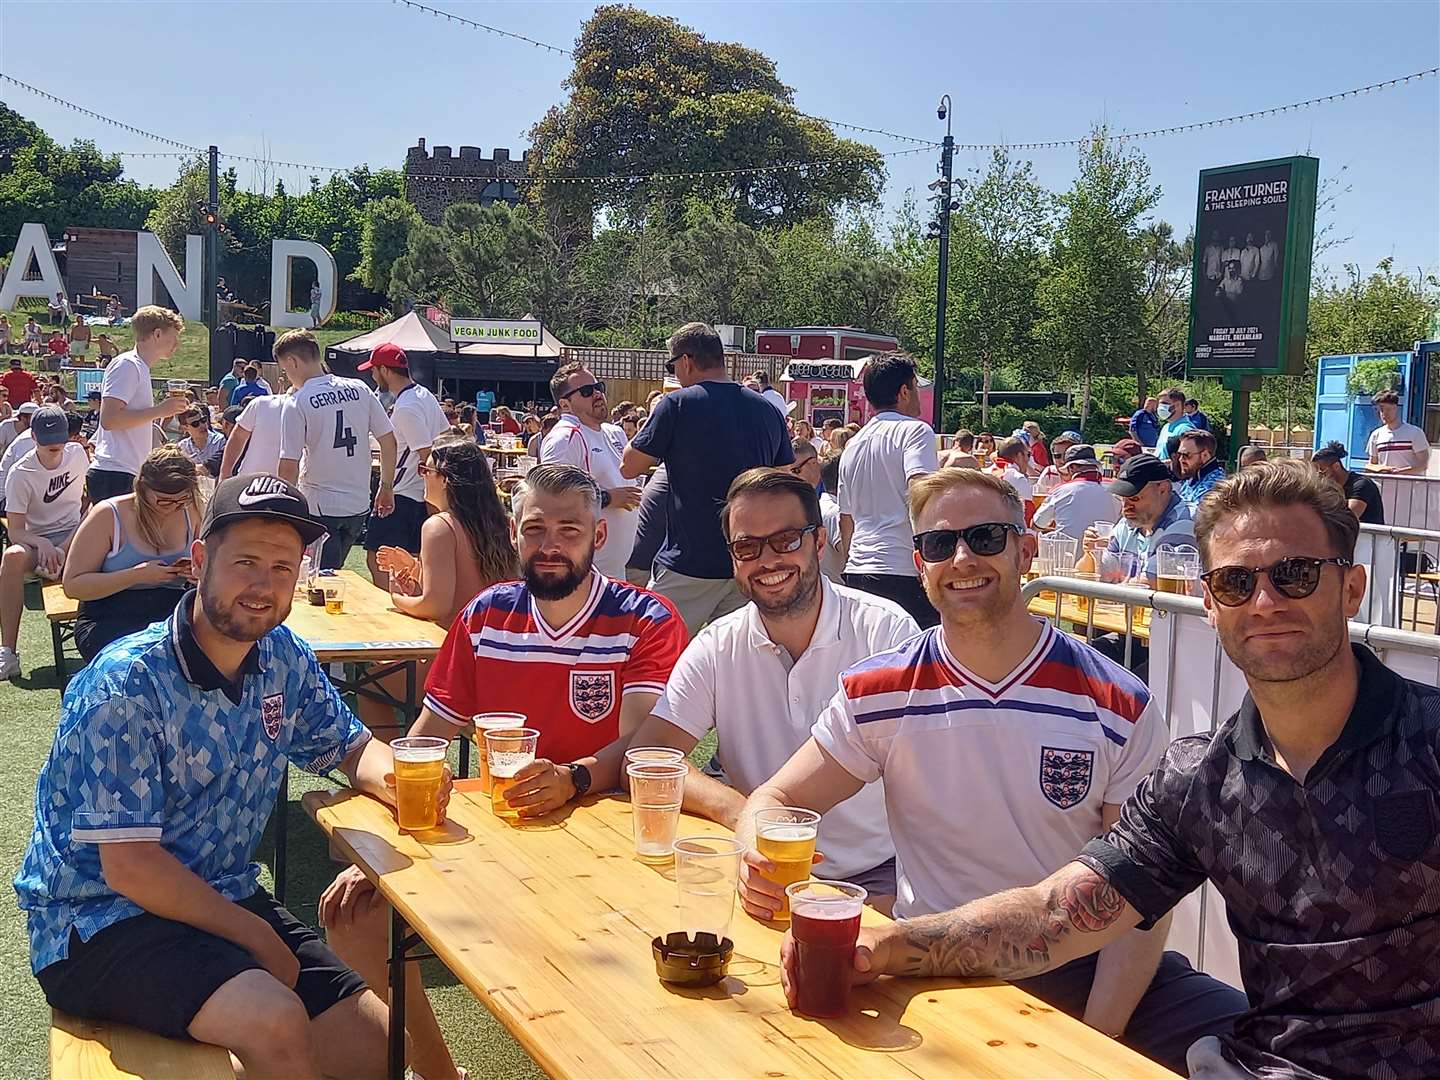 England vs Croatia at Dreamland on Sunday, June 13, 2021